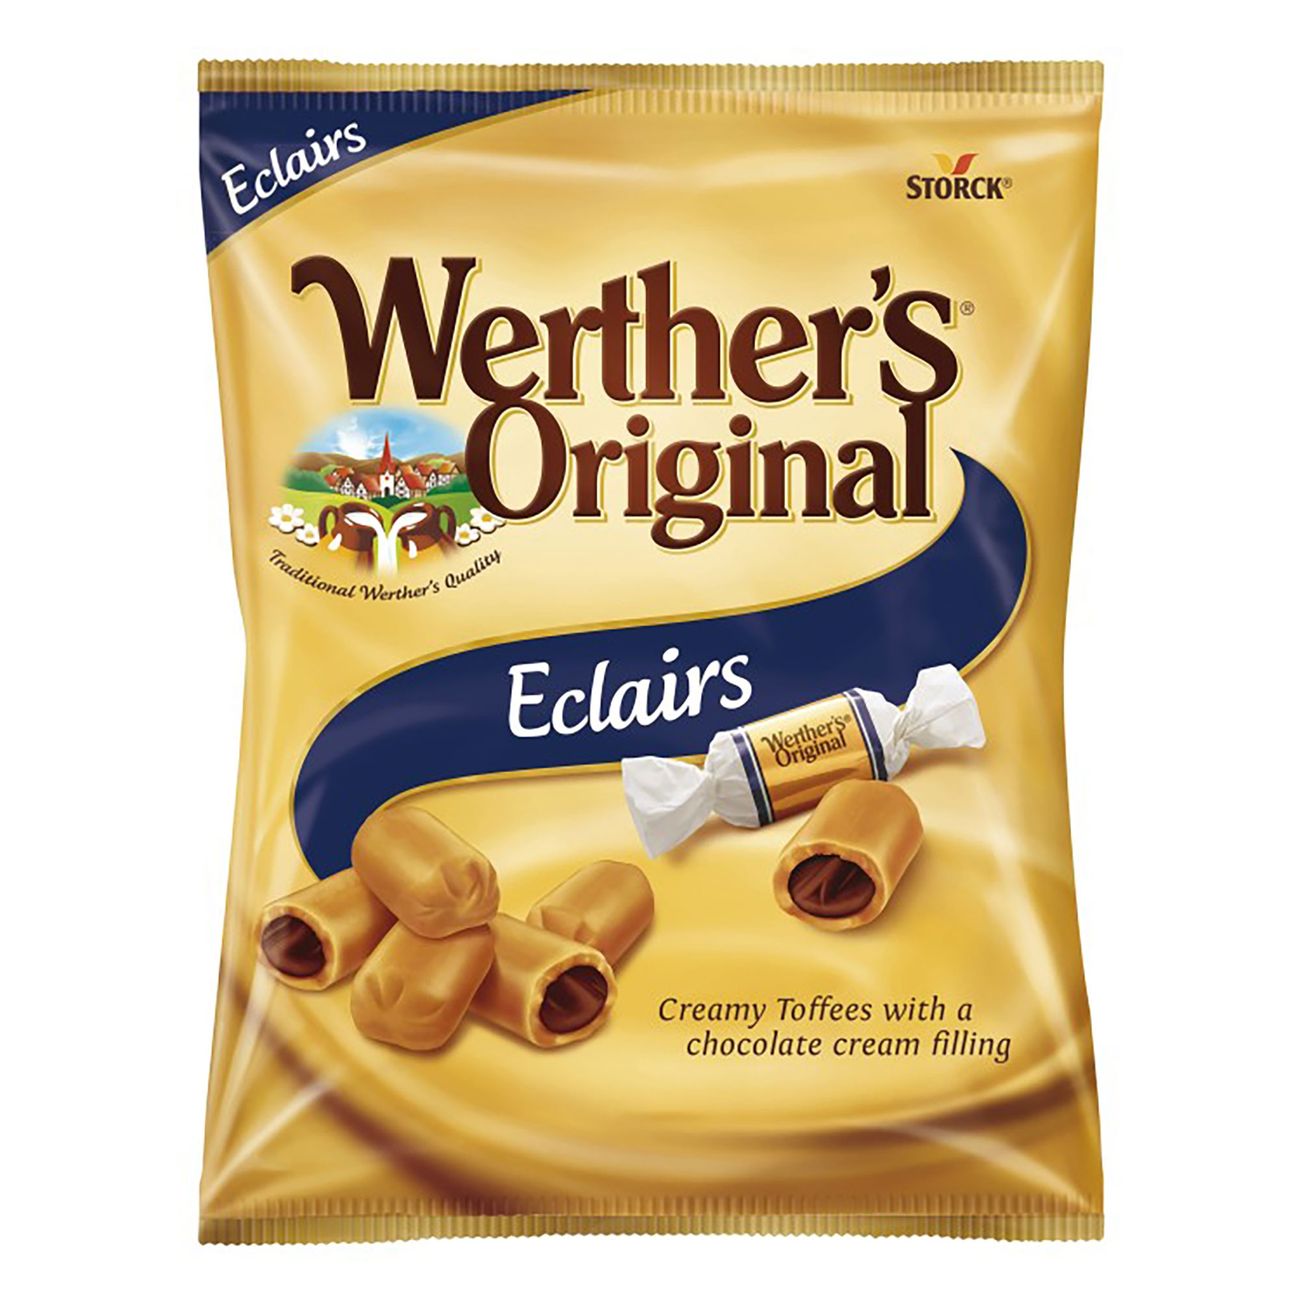 werthers-original-eclairs-85818-1